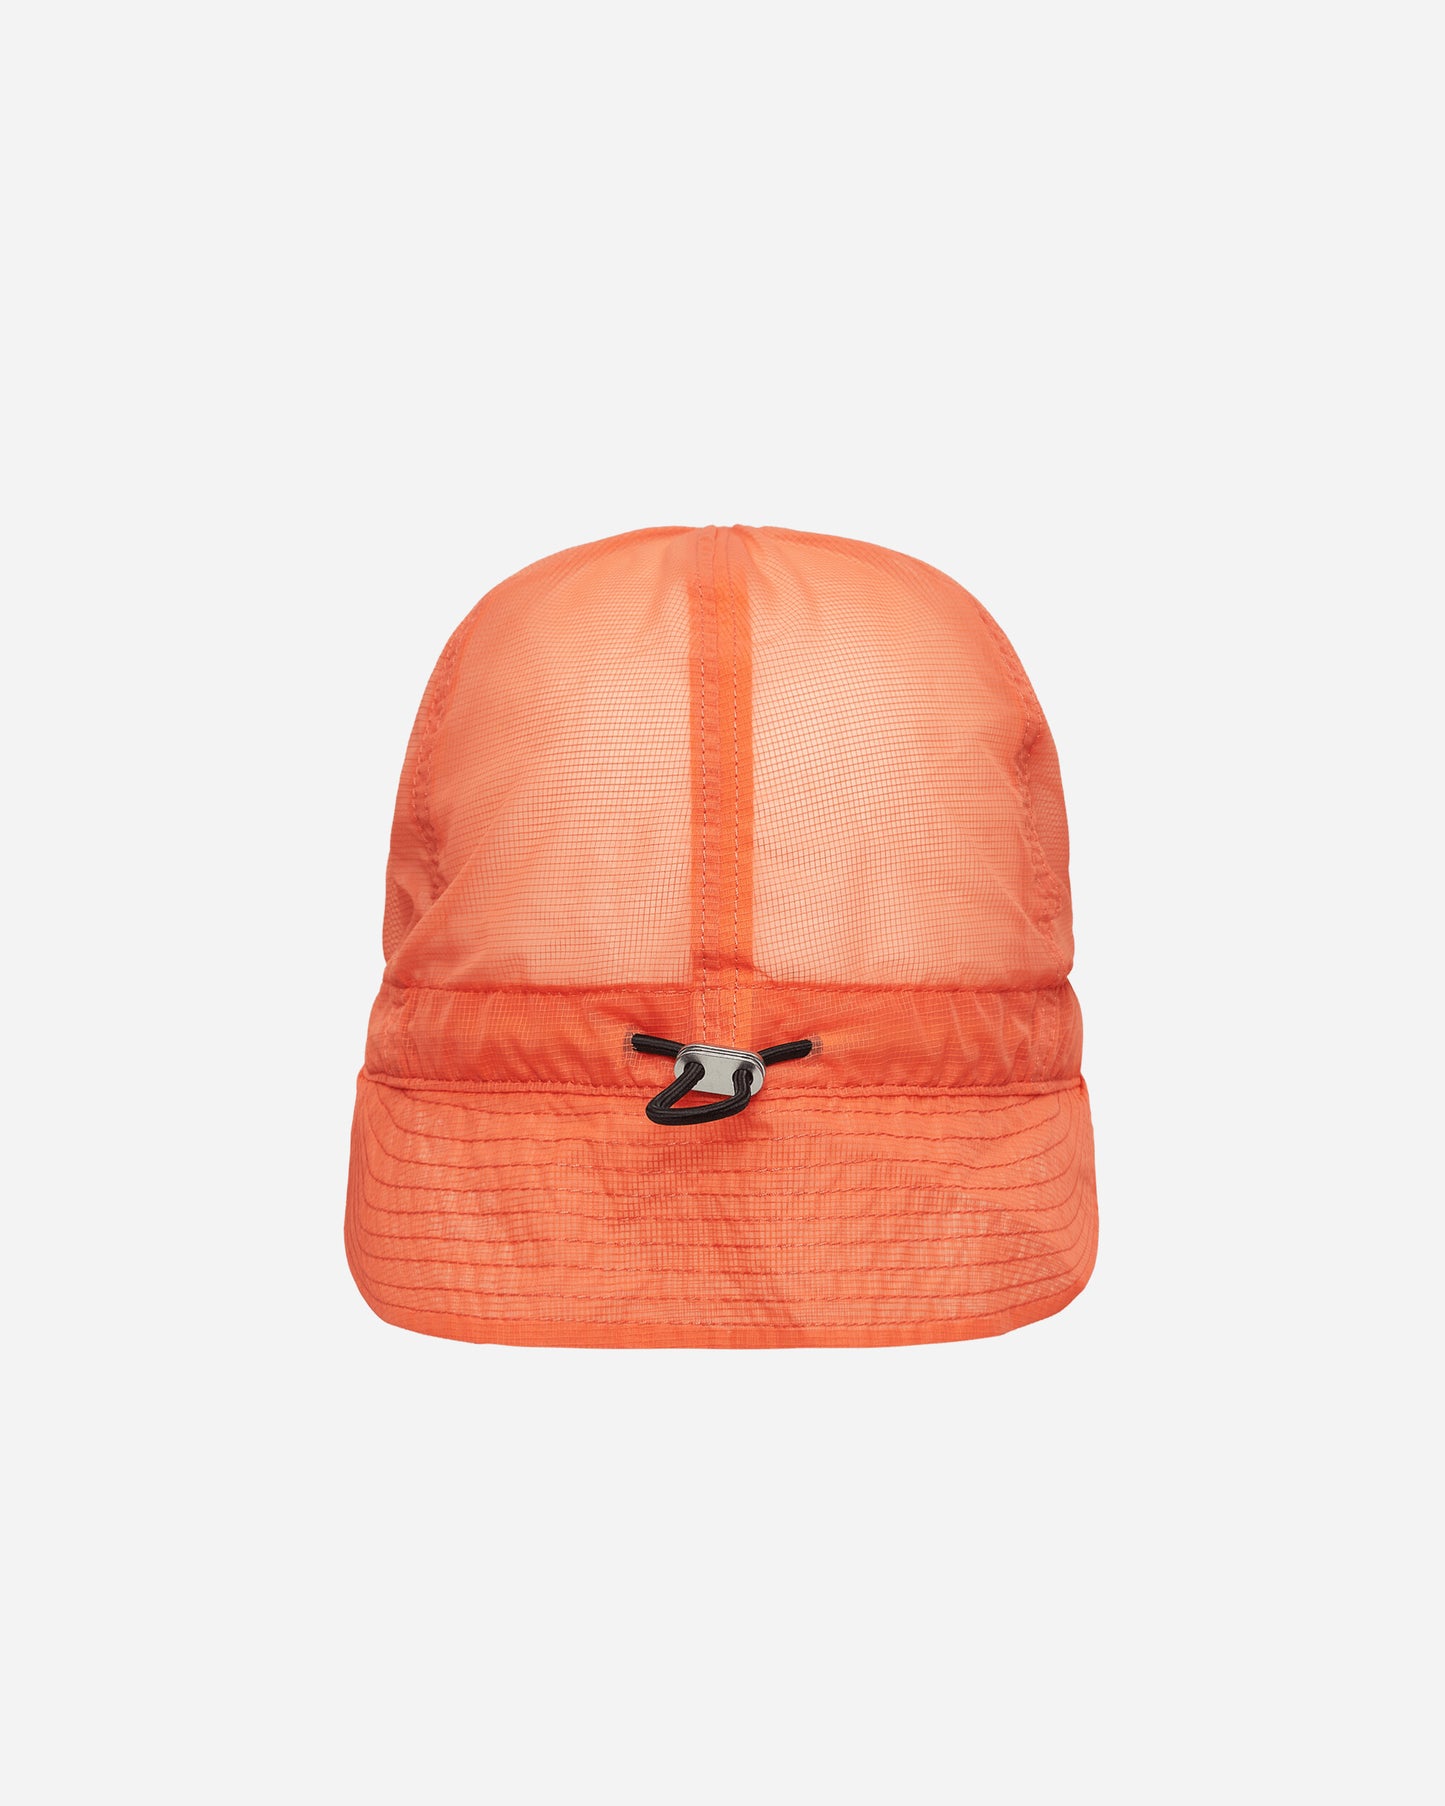 RANRA Der Cap Workwear Orange Hats Caps AMSS24HA01547165  2164